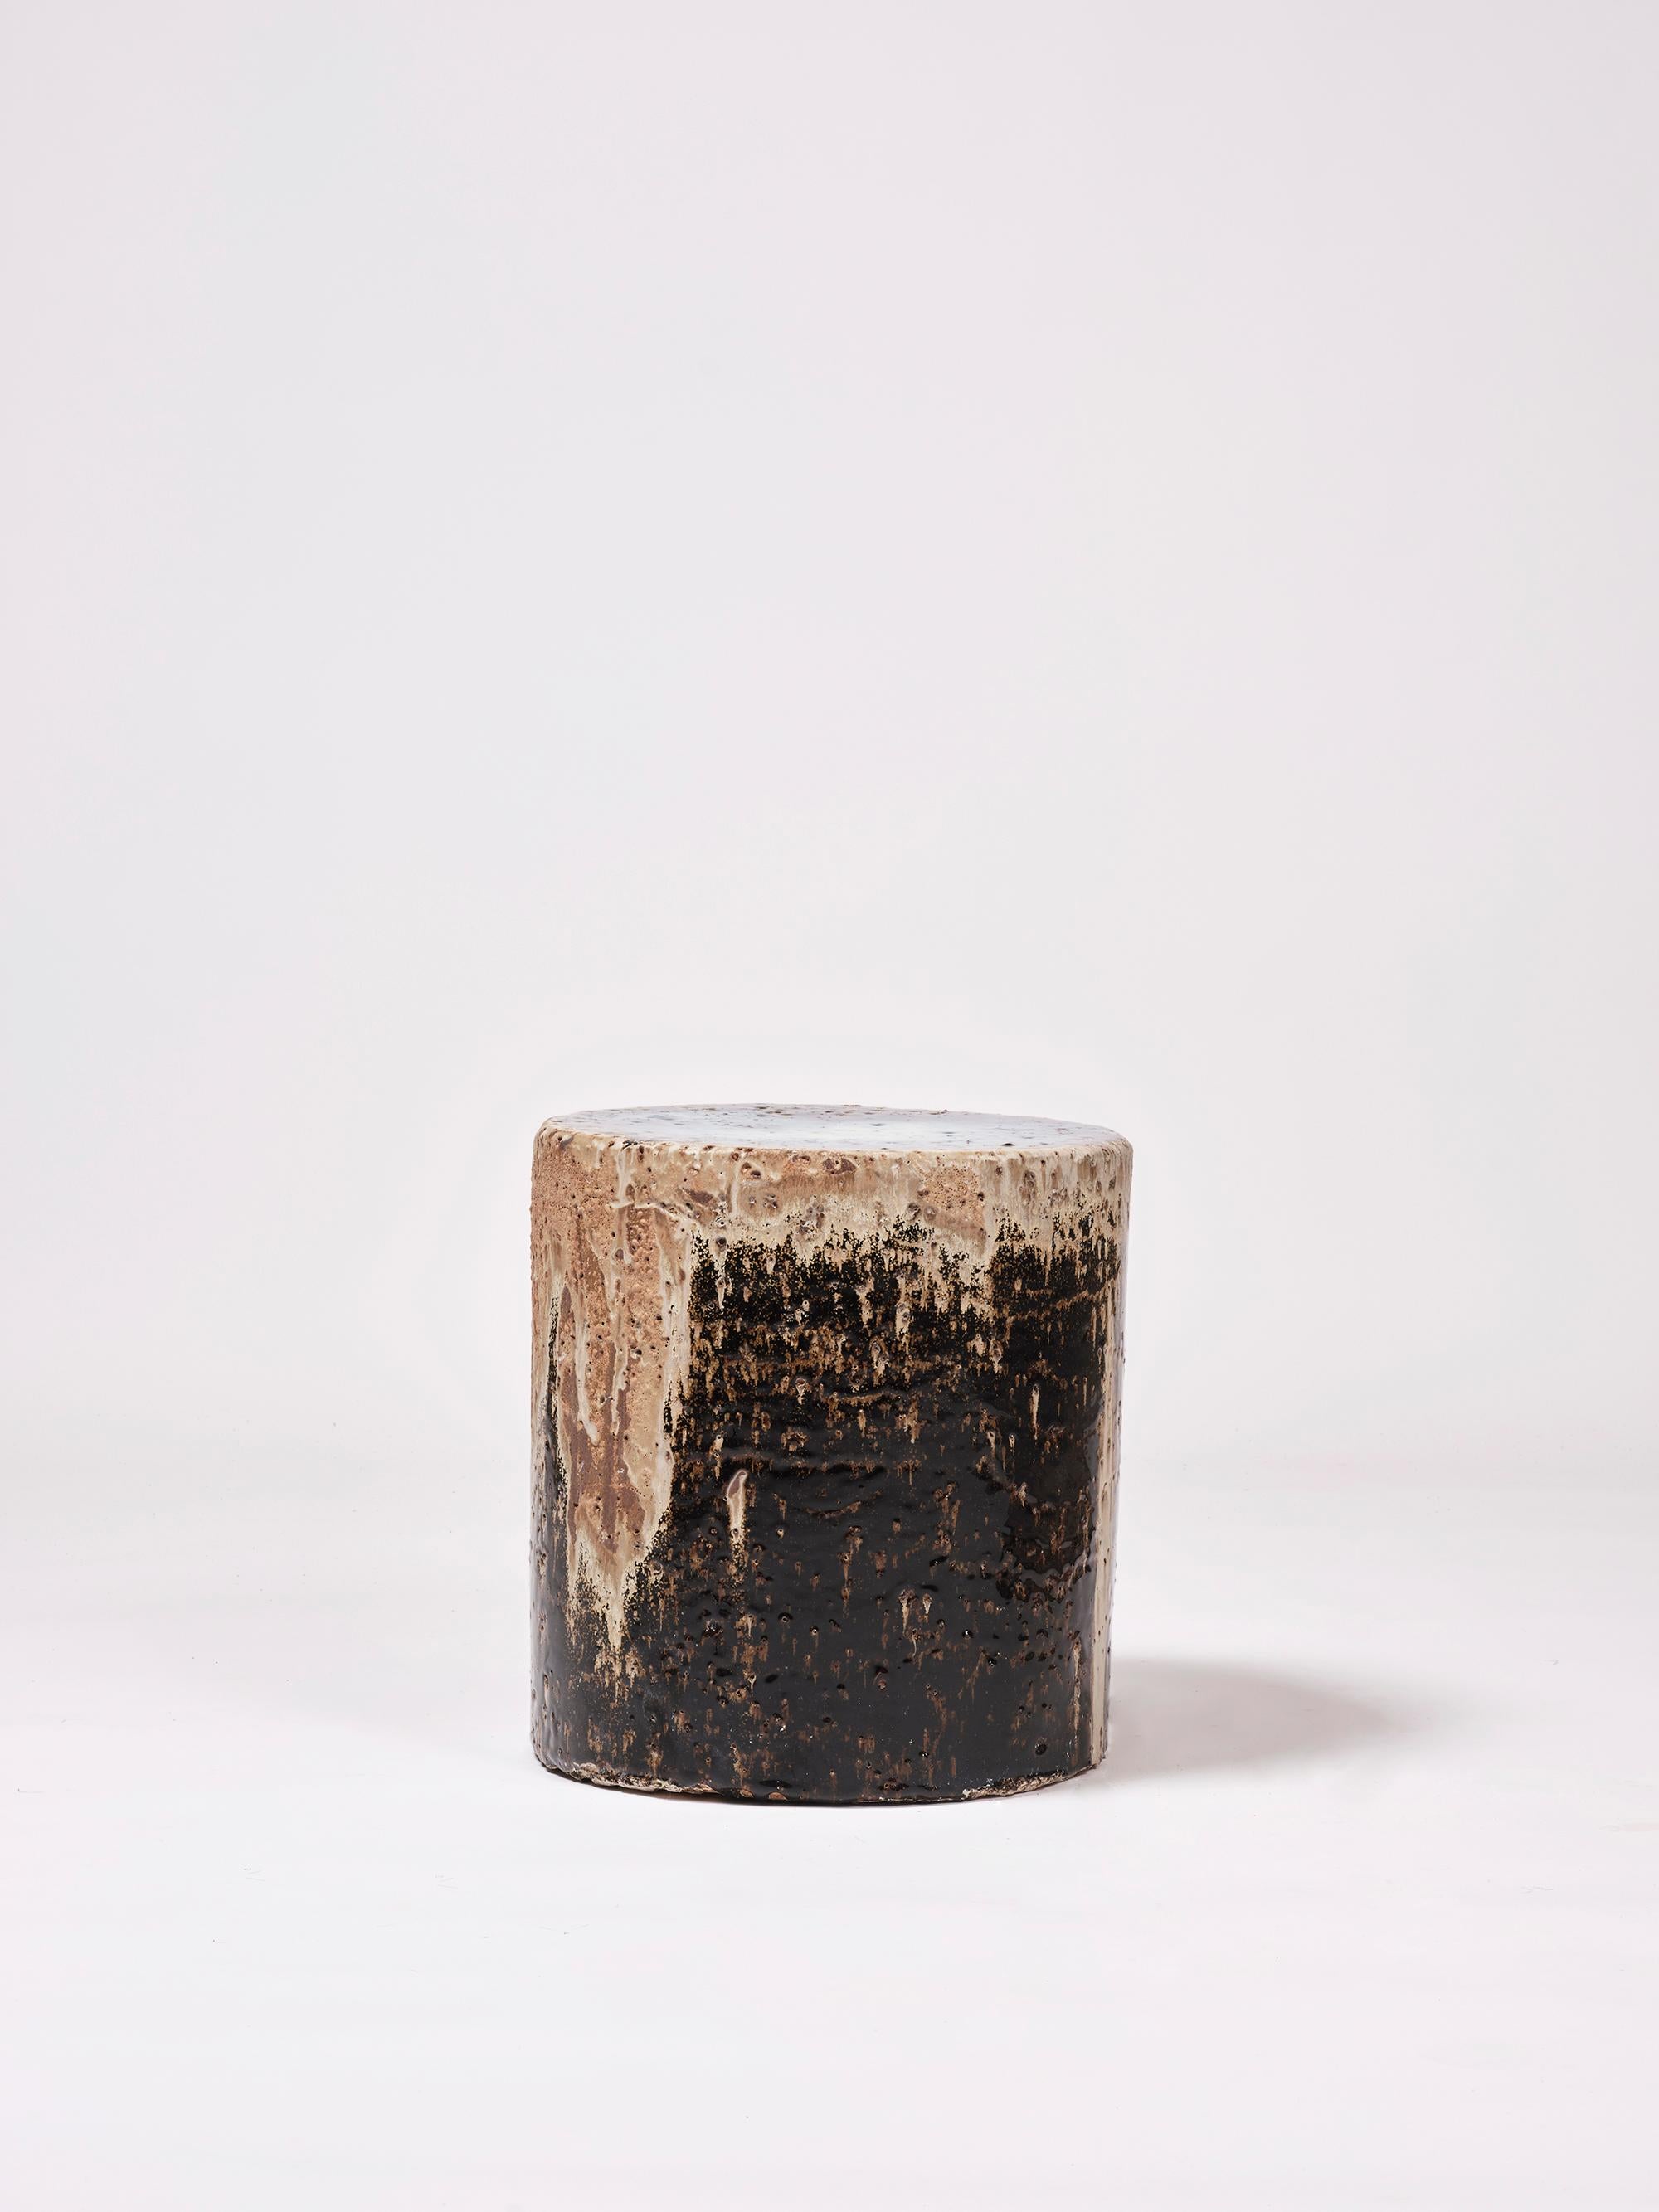 Other Contemporary Ceramic Side Table Column Stool Blue Black Beige Glazed Earthenware